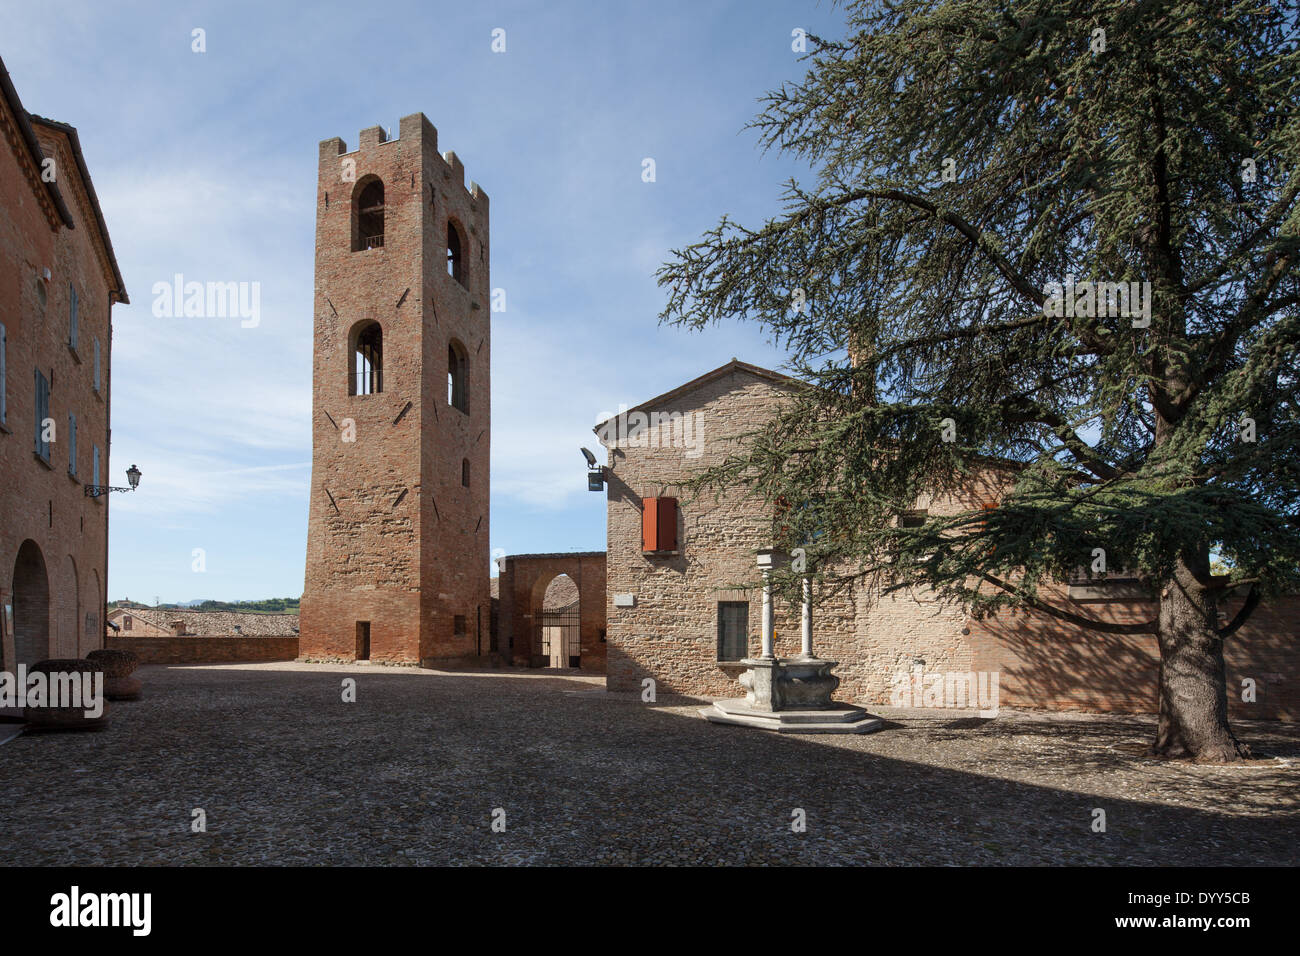 Castle of Longiano, Forlì, Italy Stock Photo